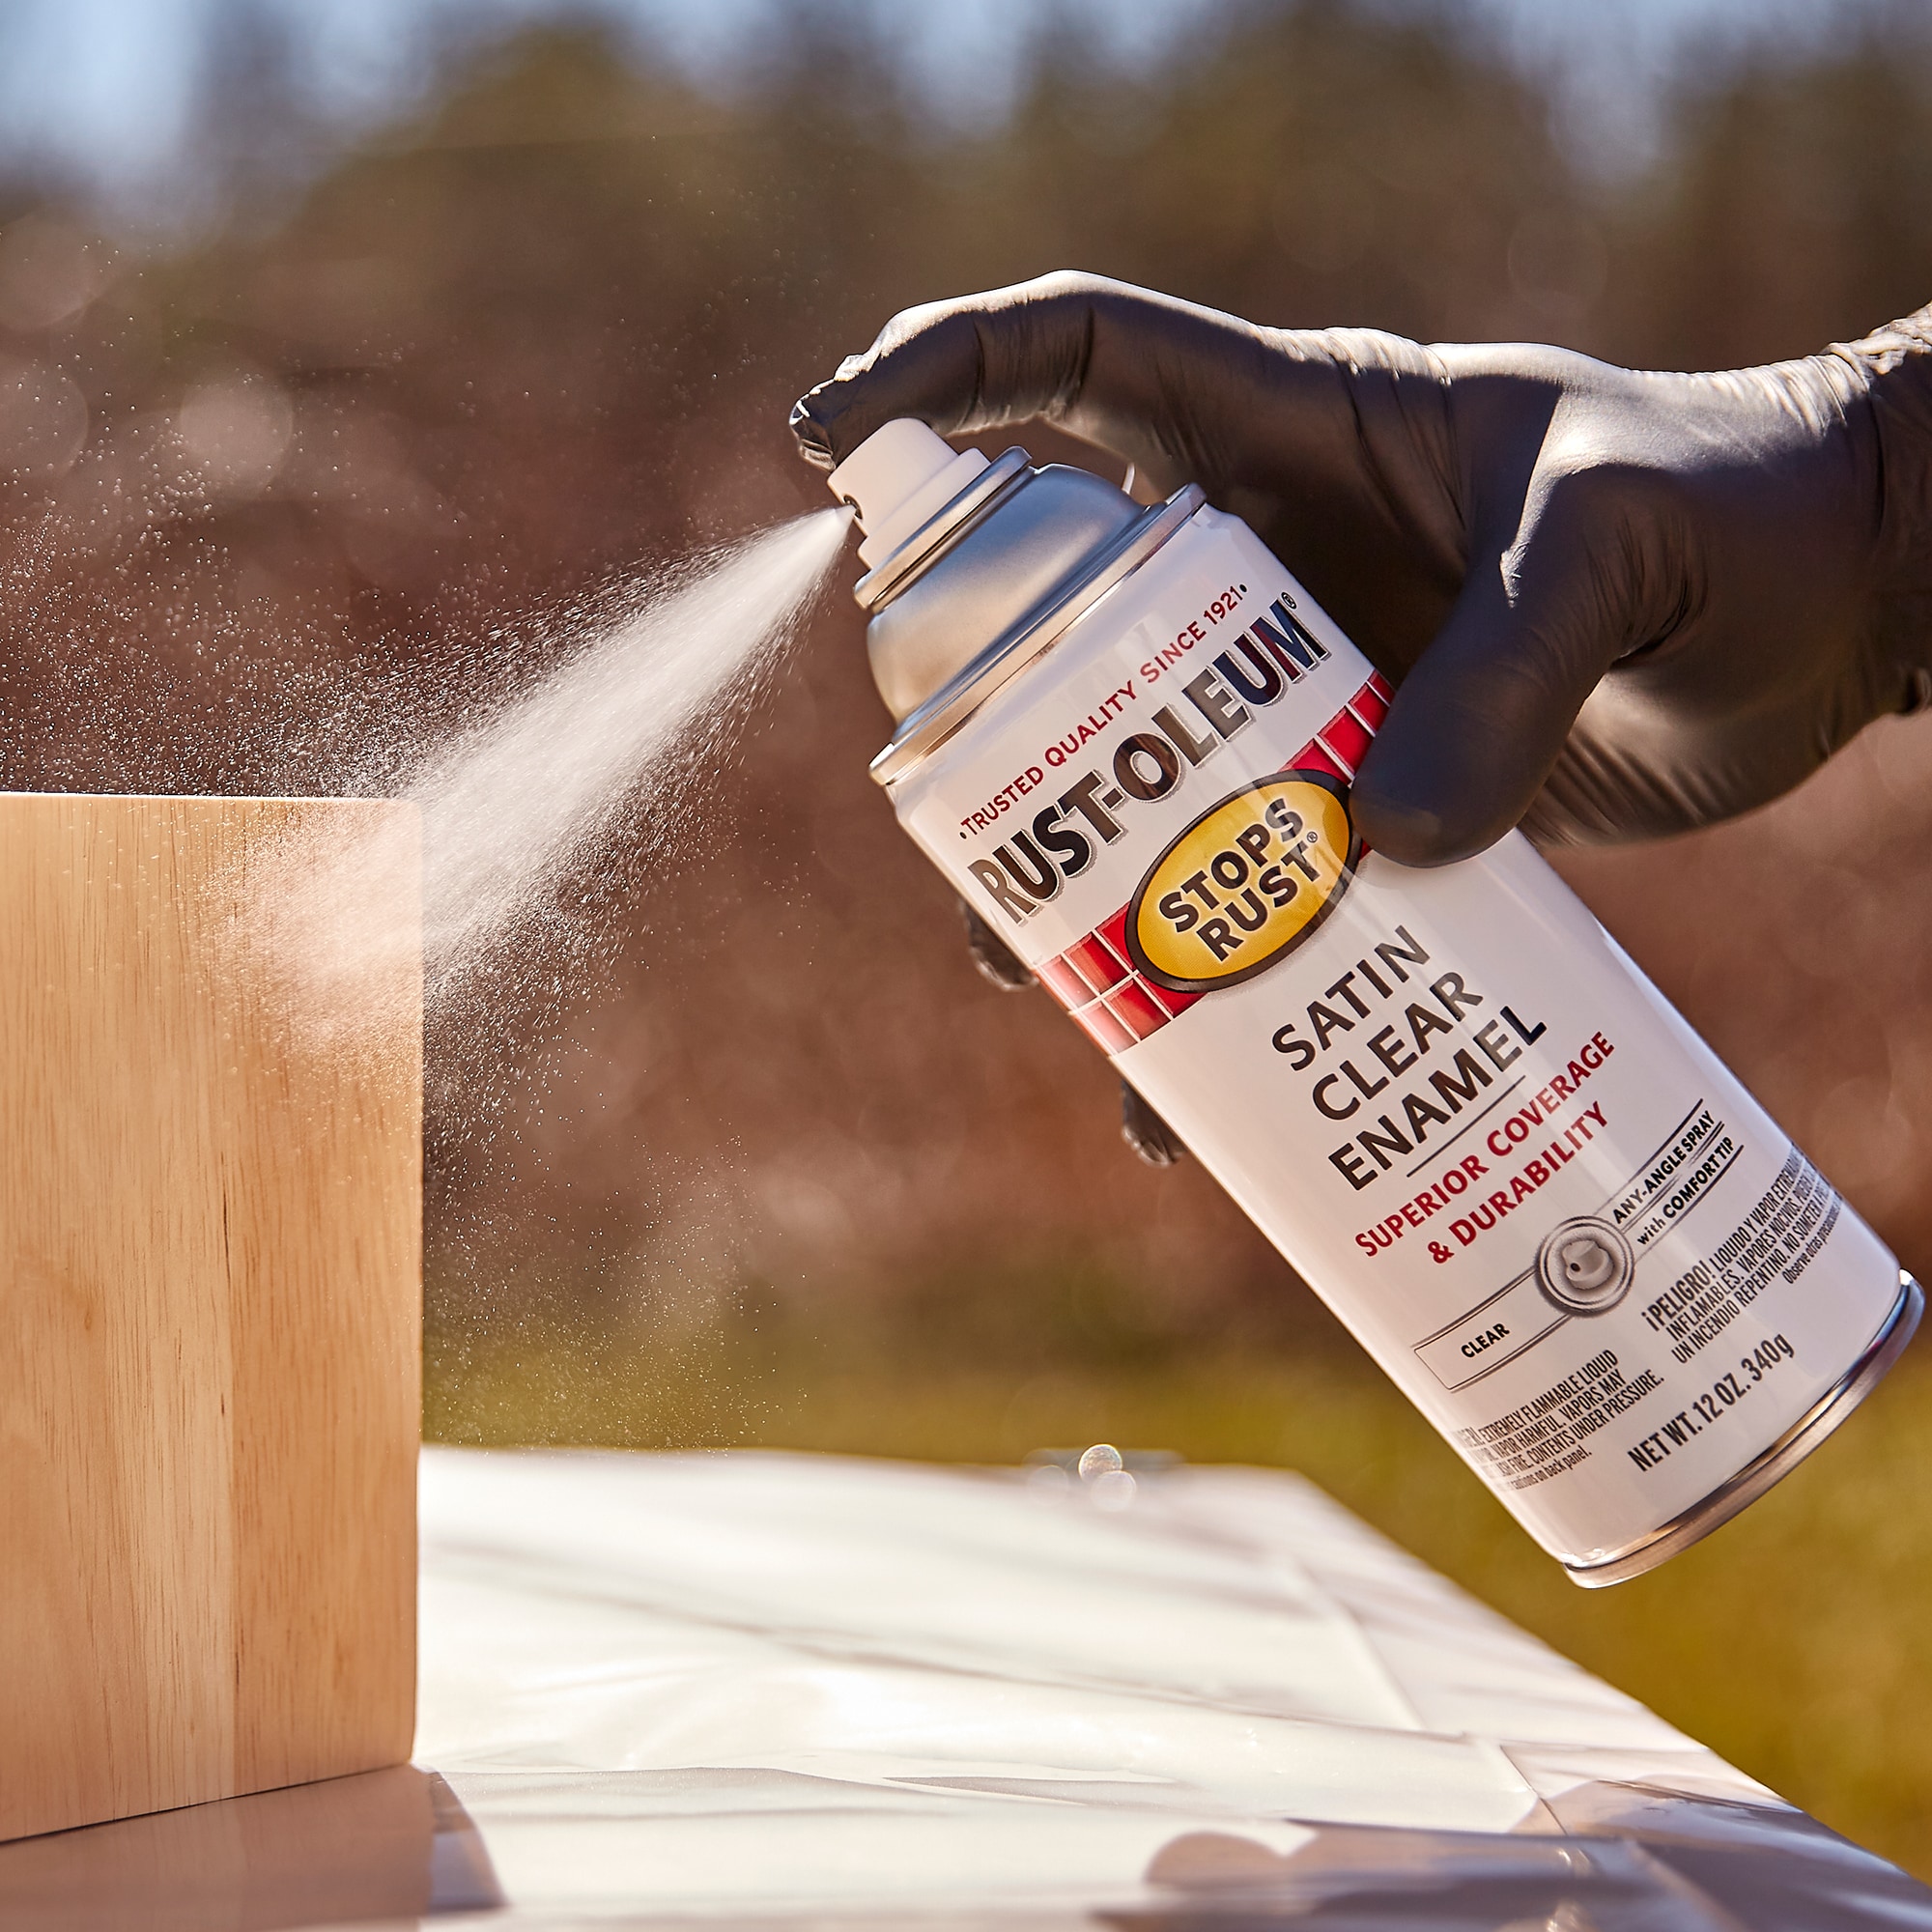 Rust-Oleum Stops Rust Turbo Gloss White Spray Paint (NET WT. 24-oz